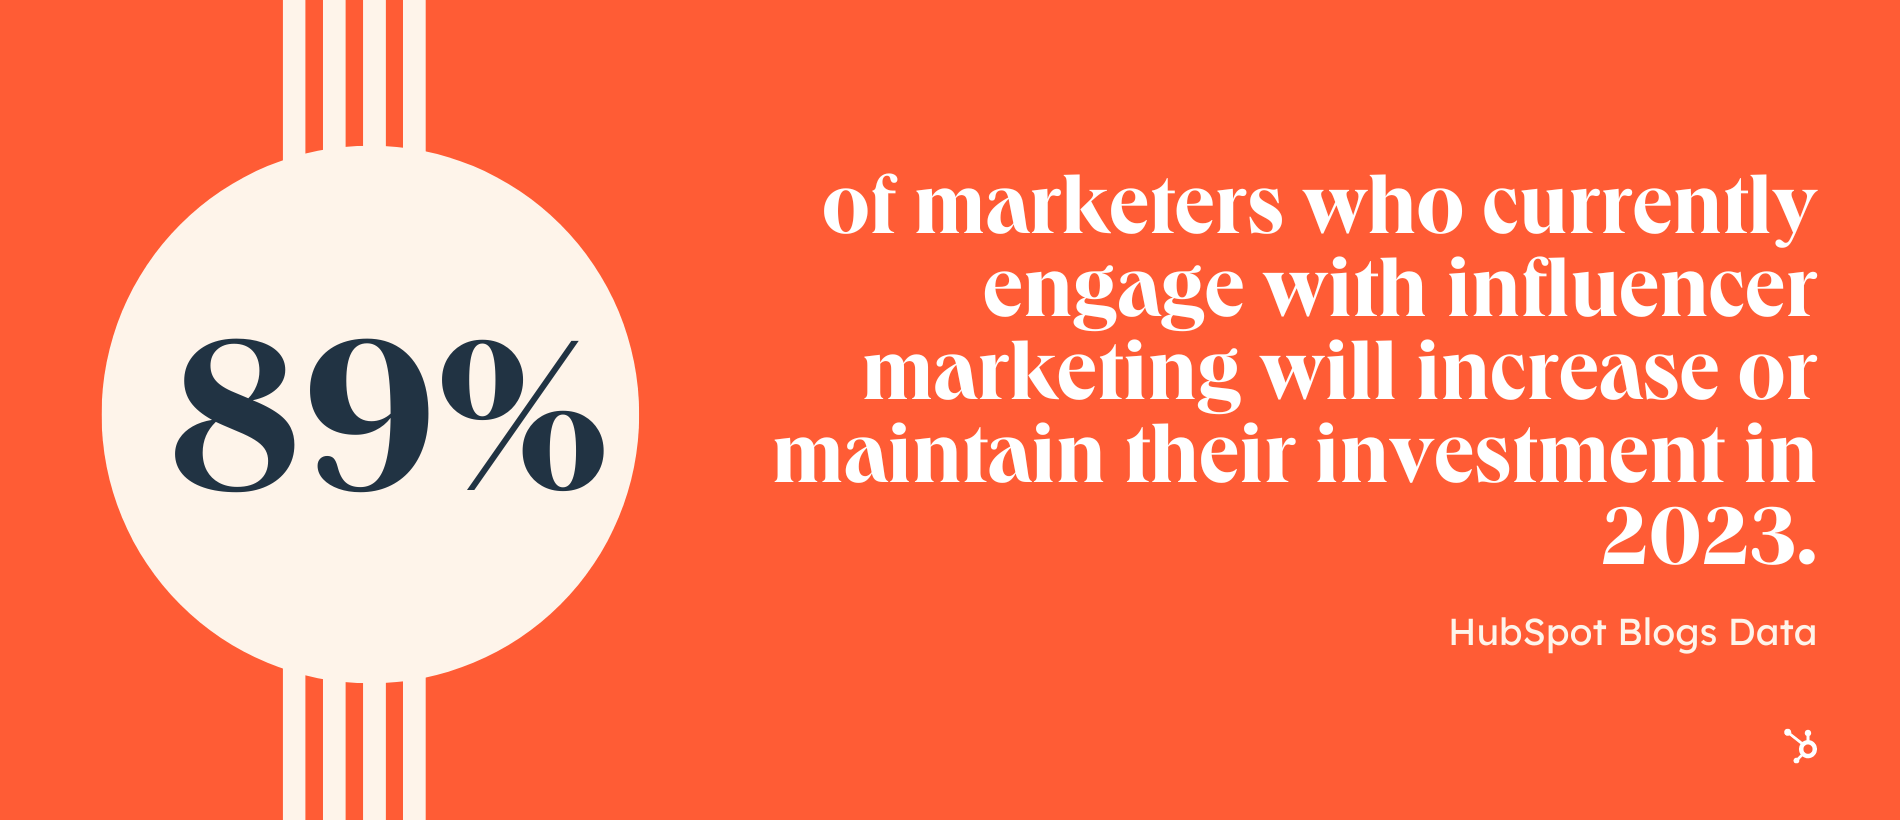 influencer marketing statistic